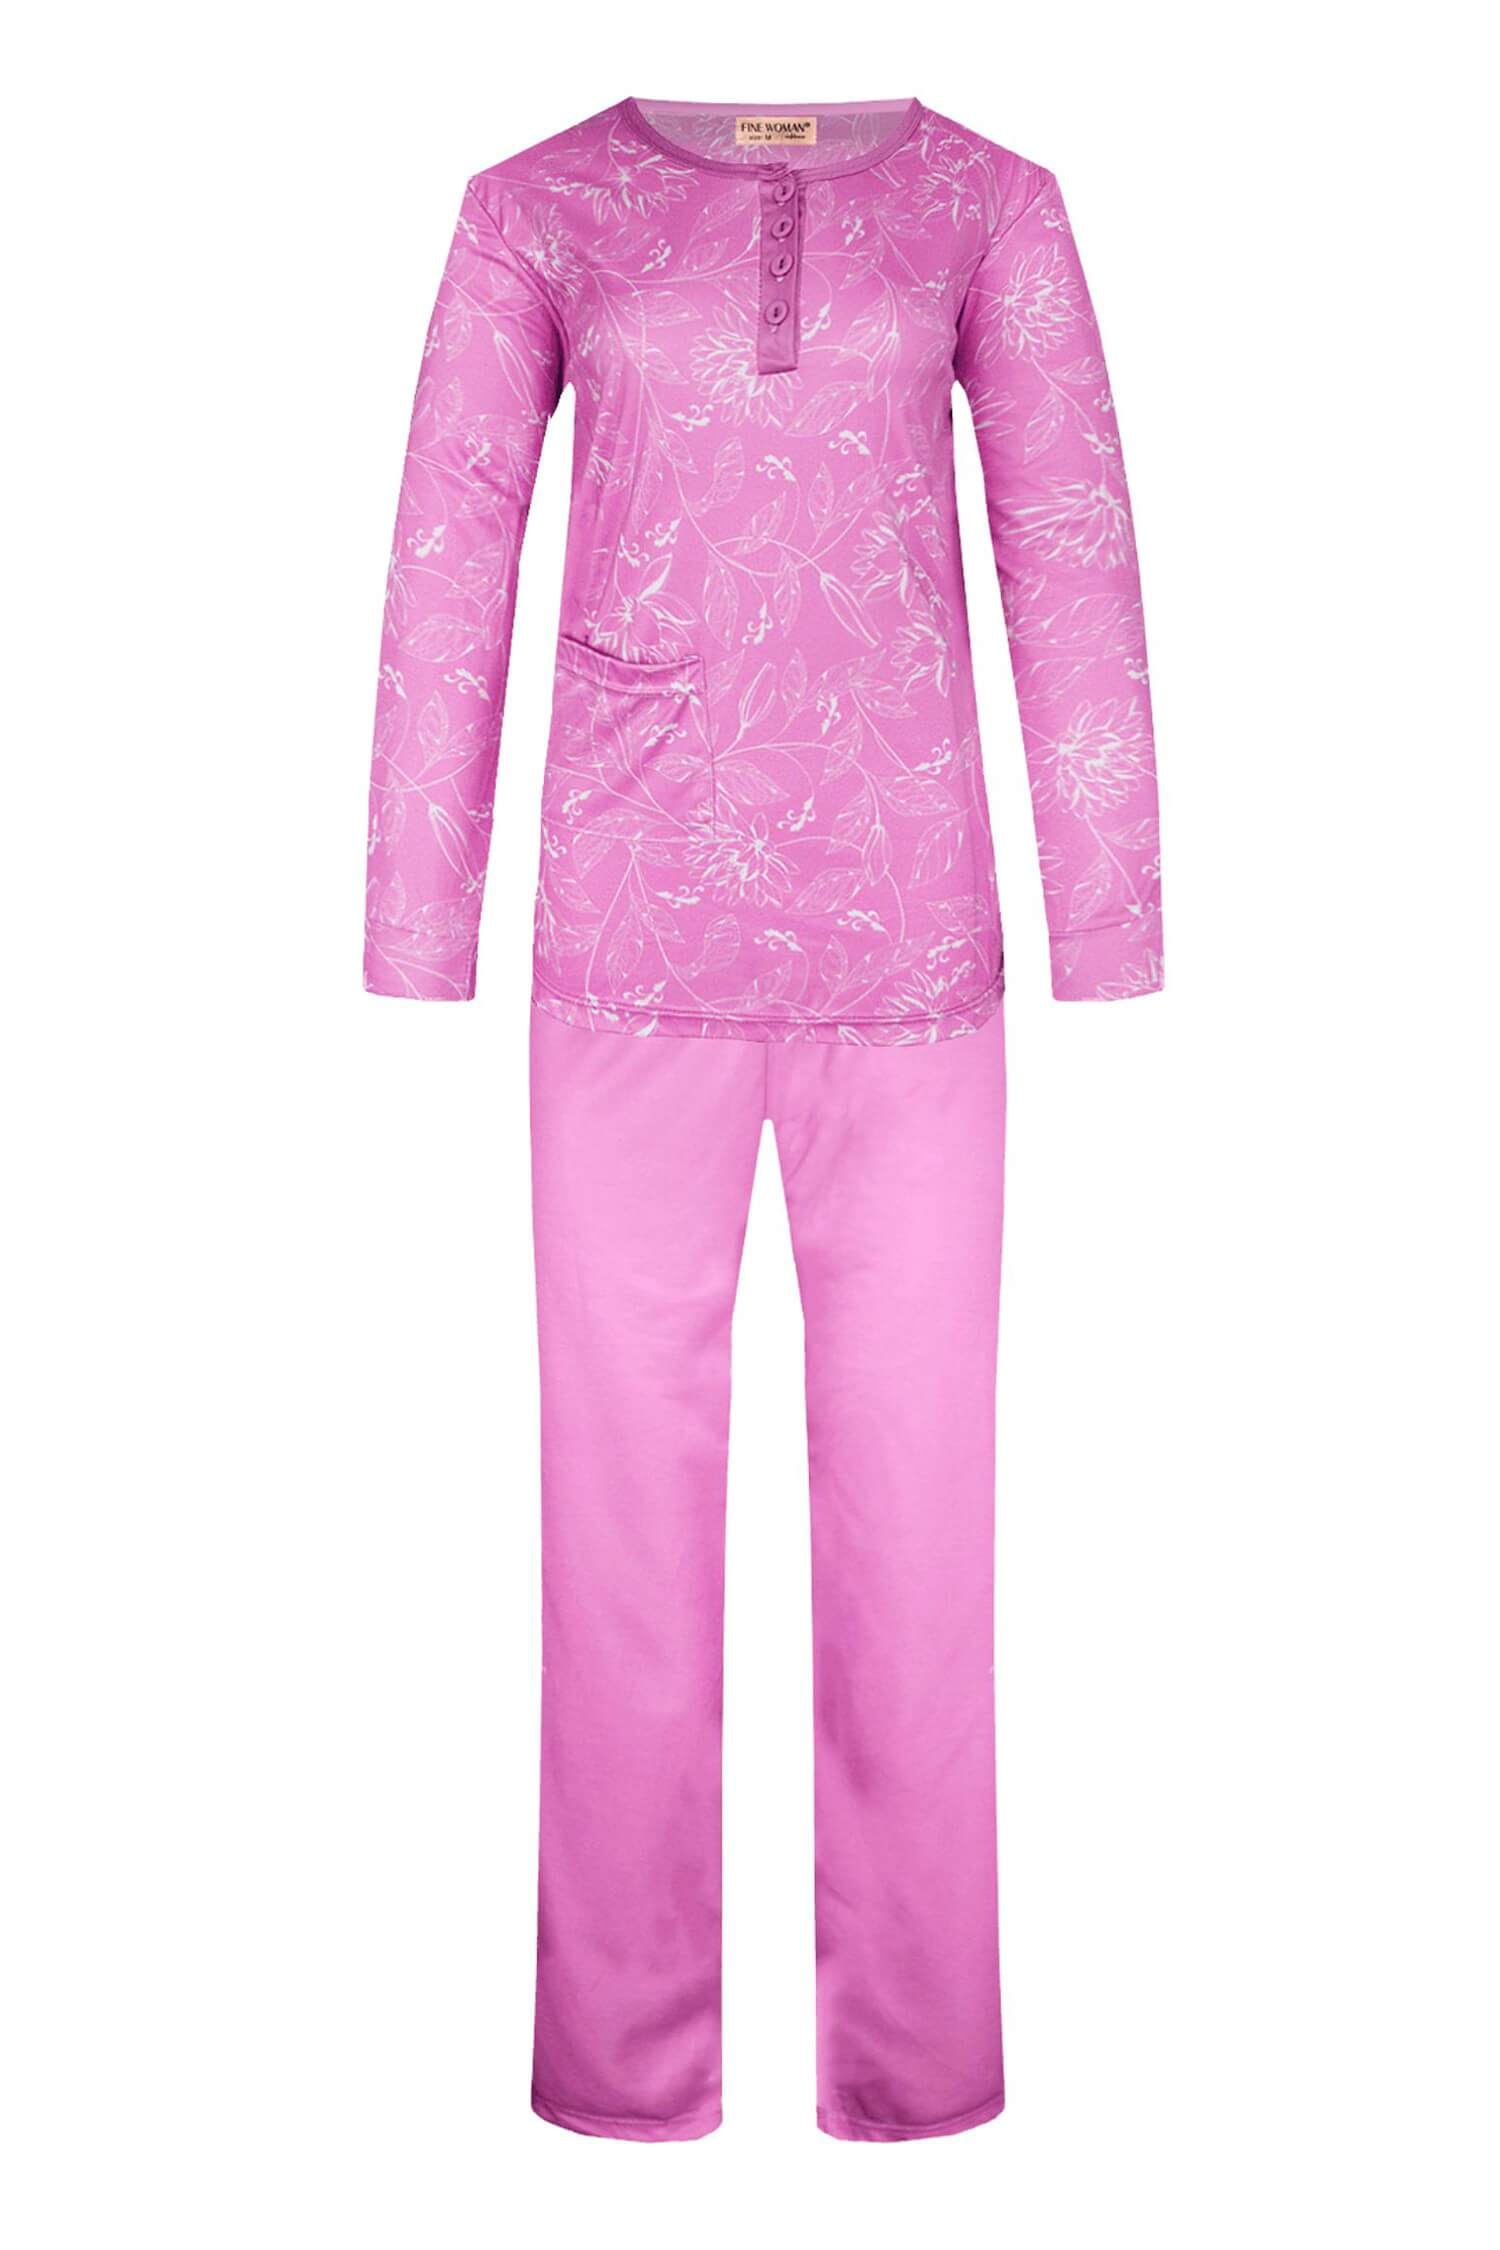 Sára dámské pyžamo dlouhý rukáv 2299 XXL růžová